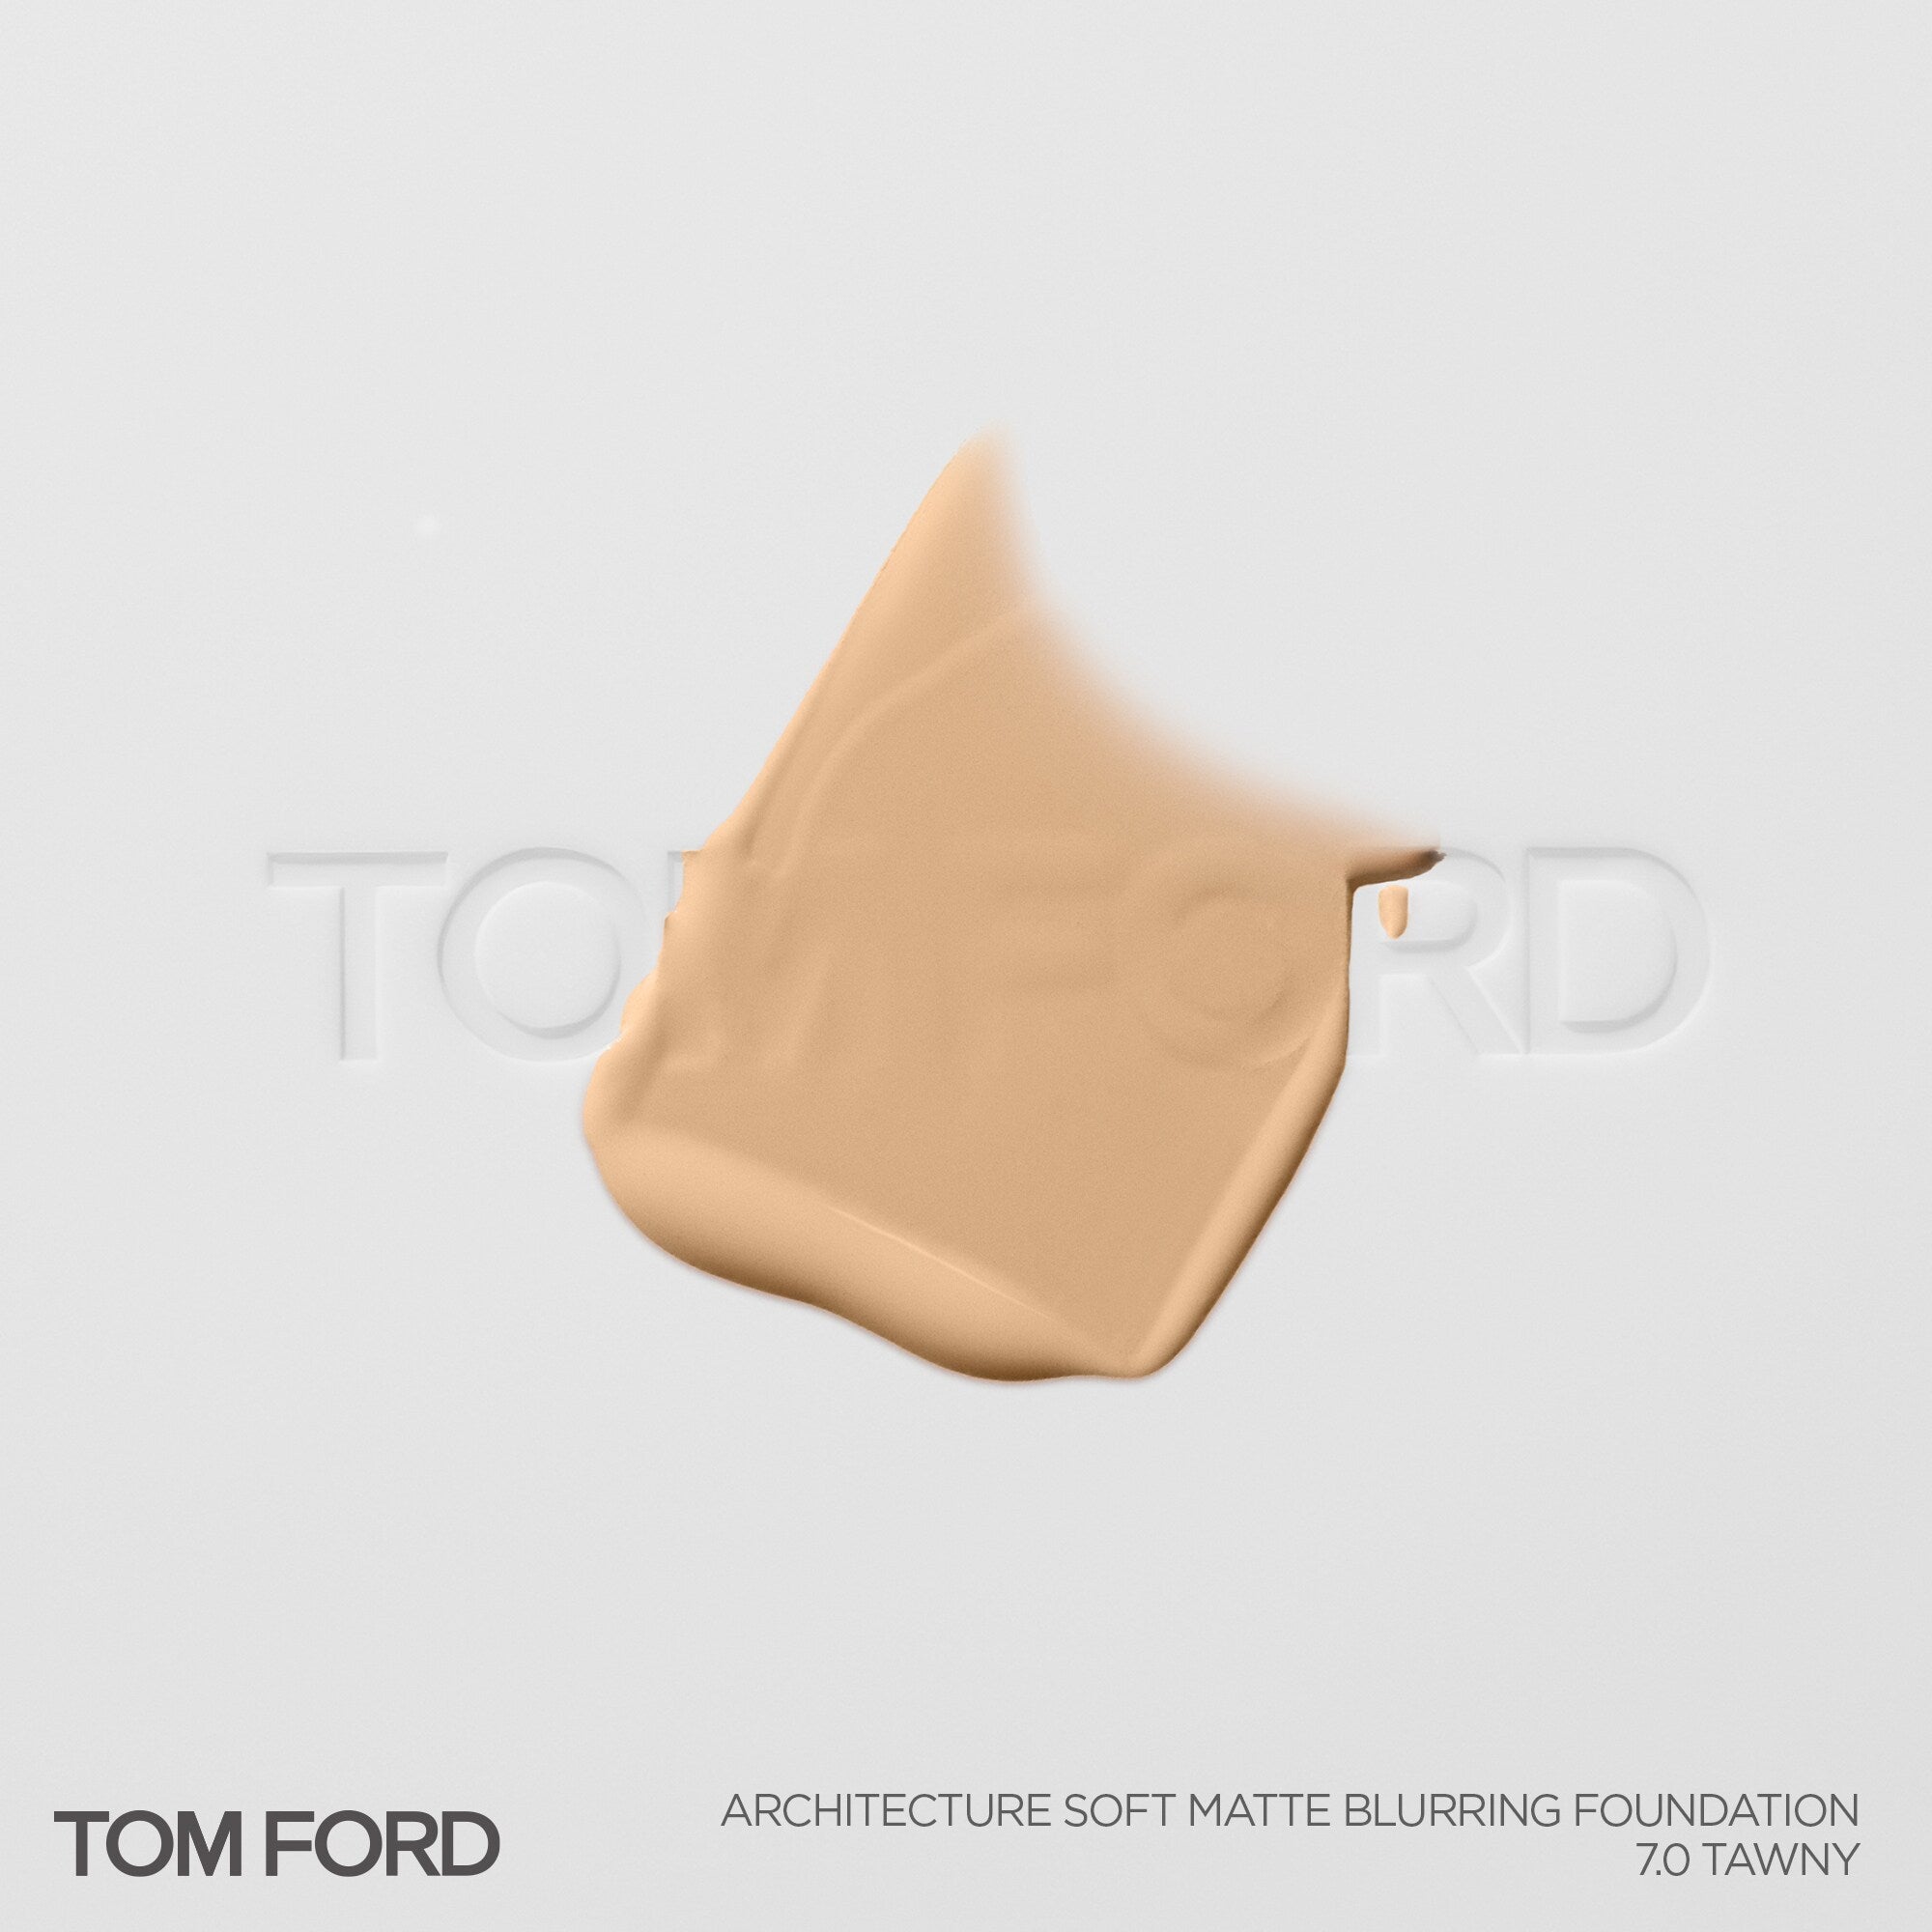 Kem Nền TOM FORD Architecture Soft Matte Foundation #7.0 Tawny